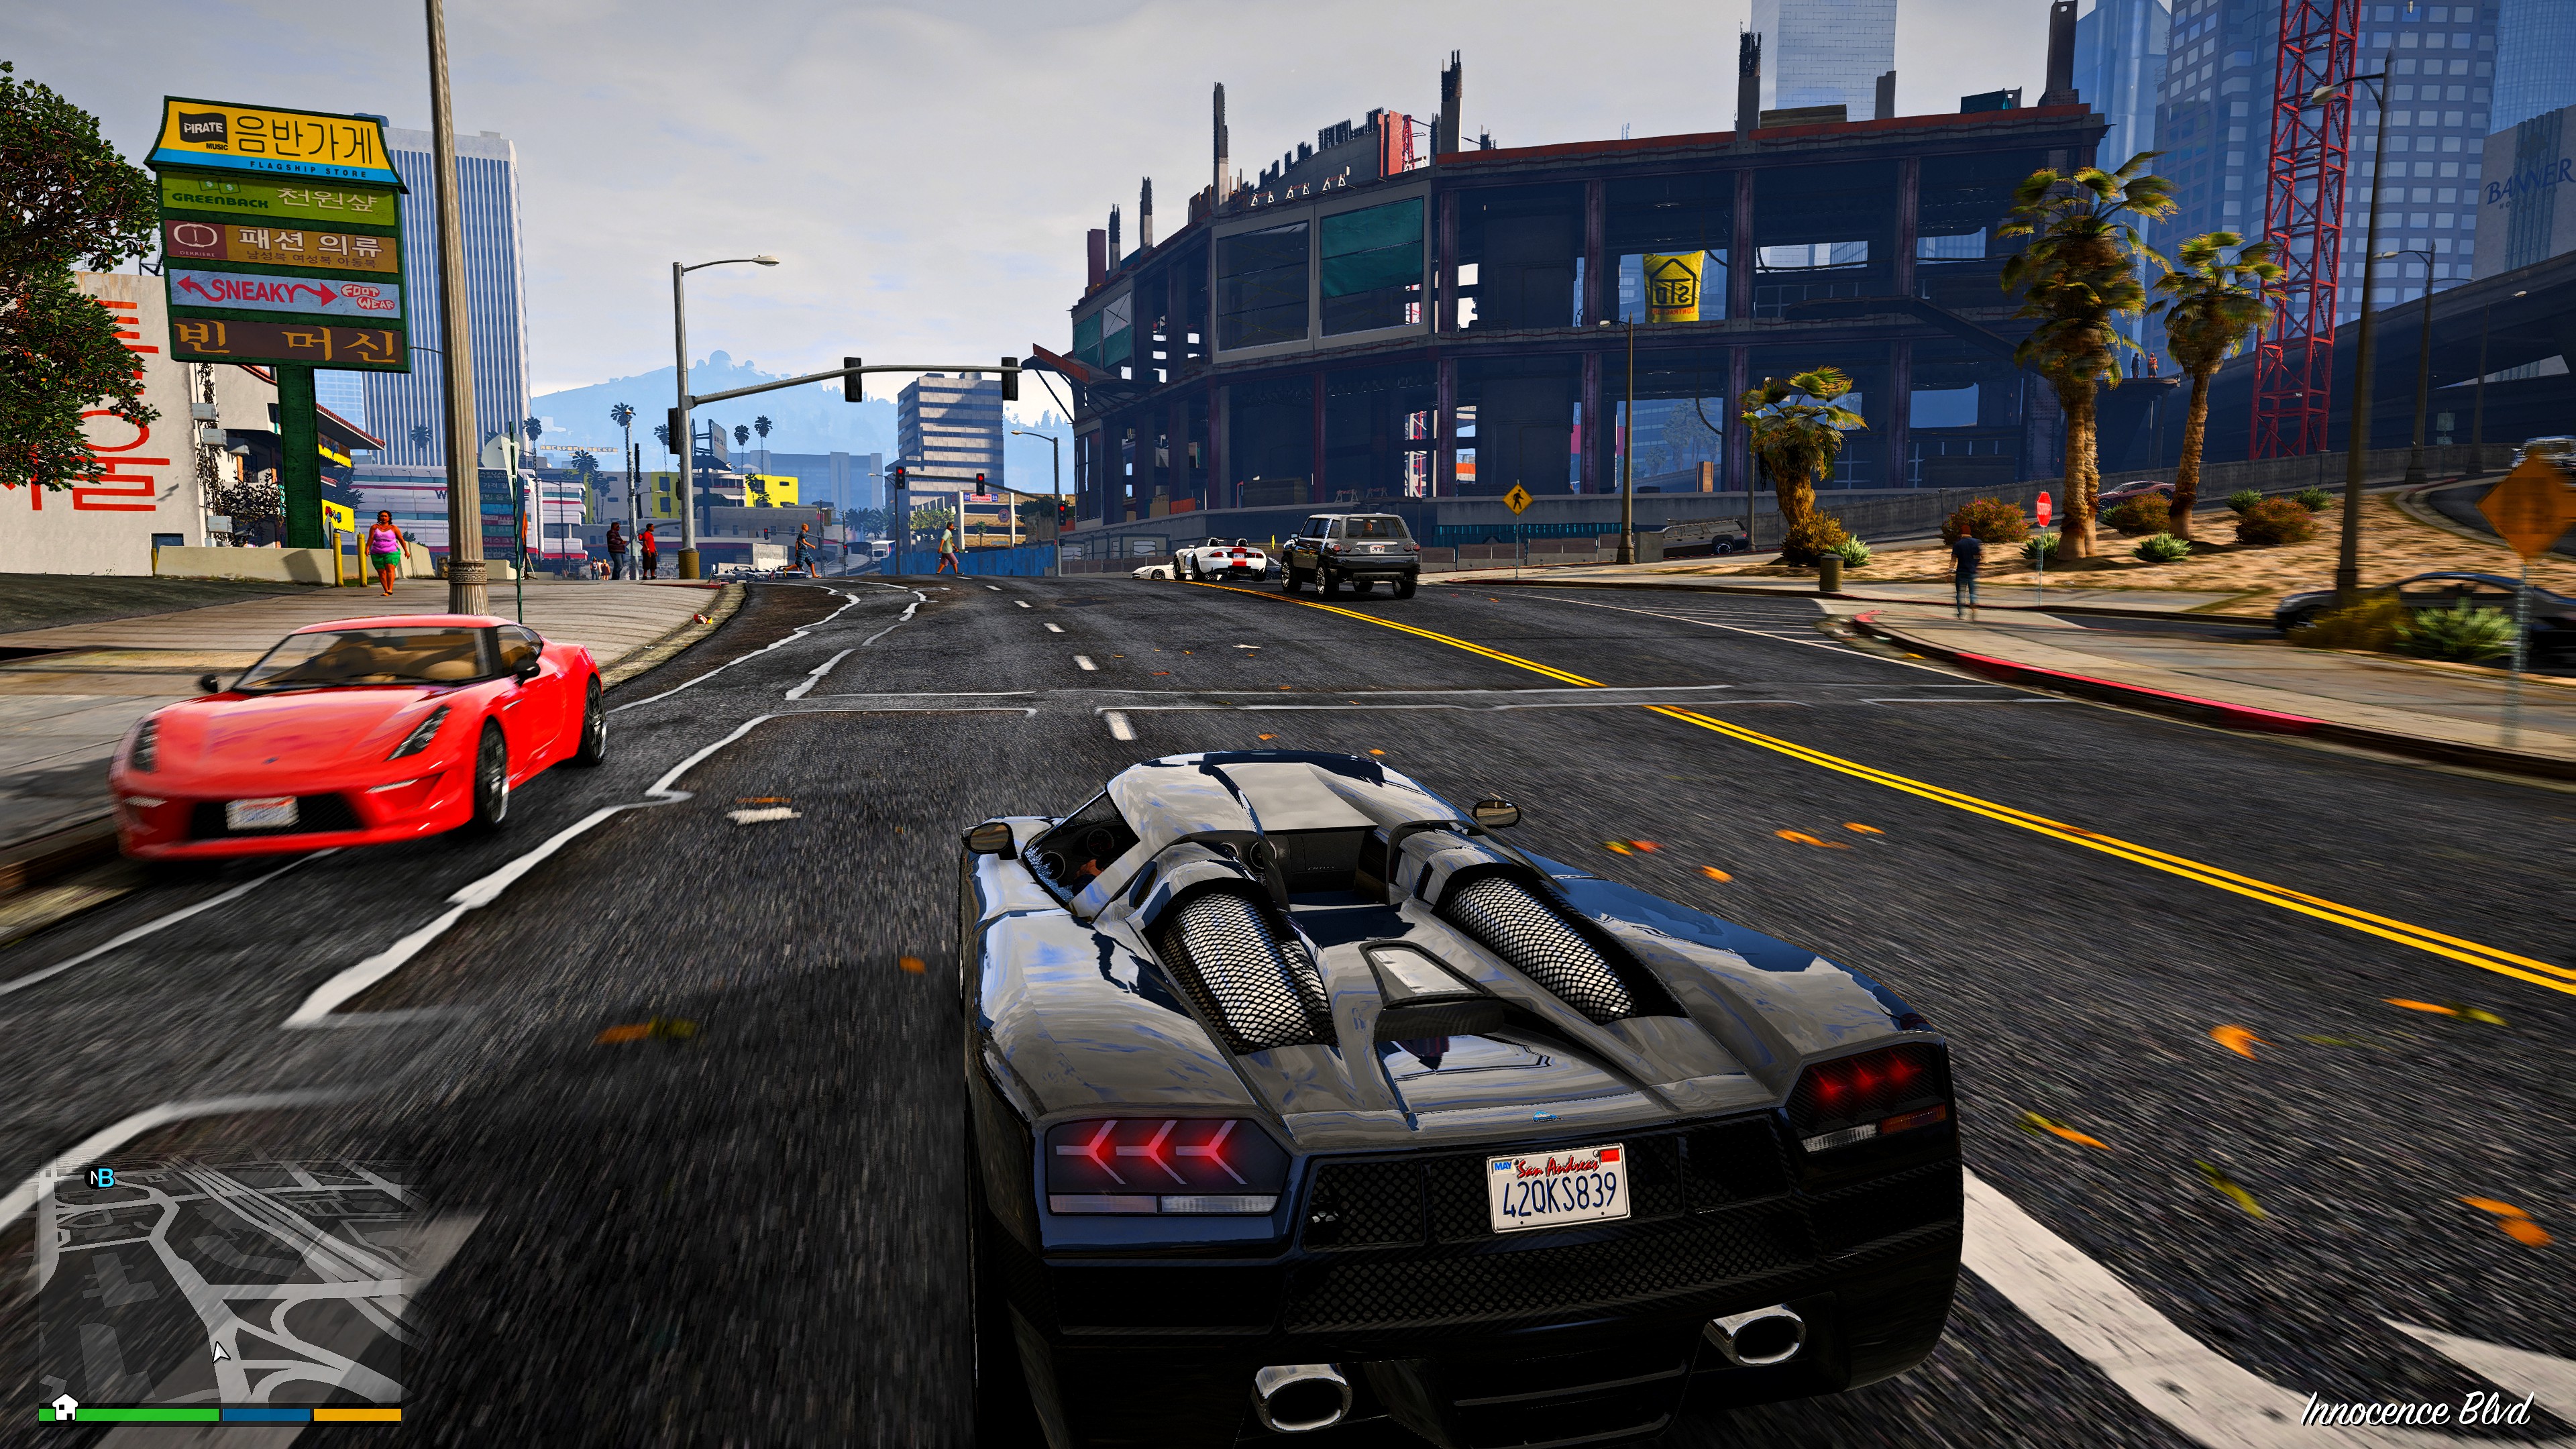 Mis A Jour Gta 6 Casino Date De Sortie GTA 6 : Date de sortie du prochain Grand Theft Auto - Breakflip